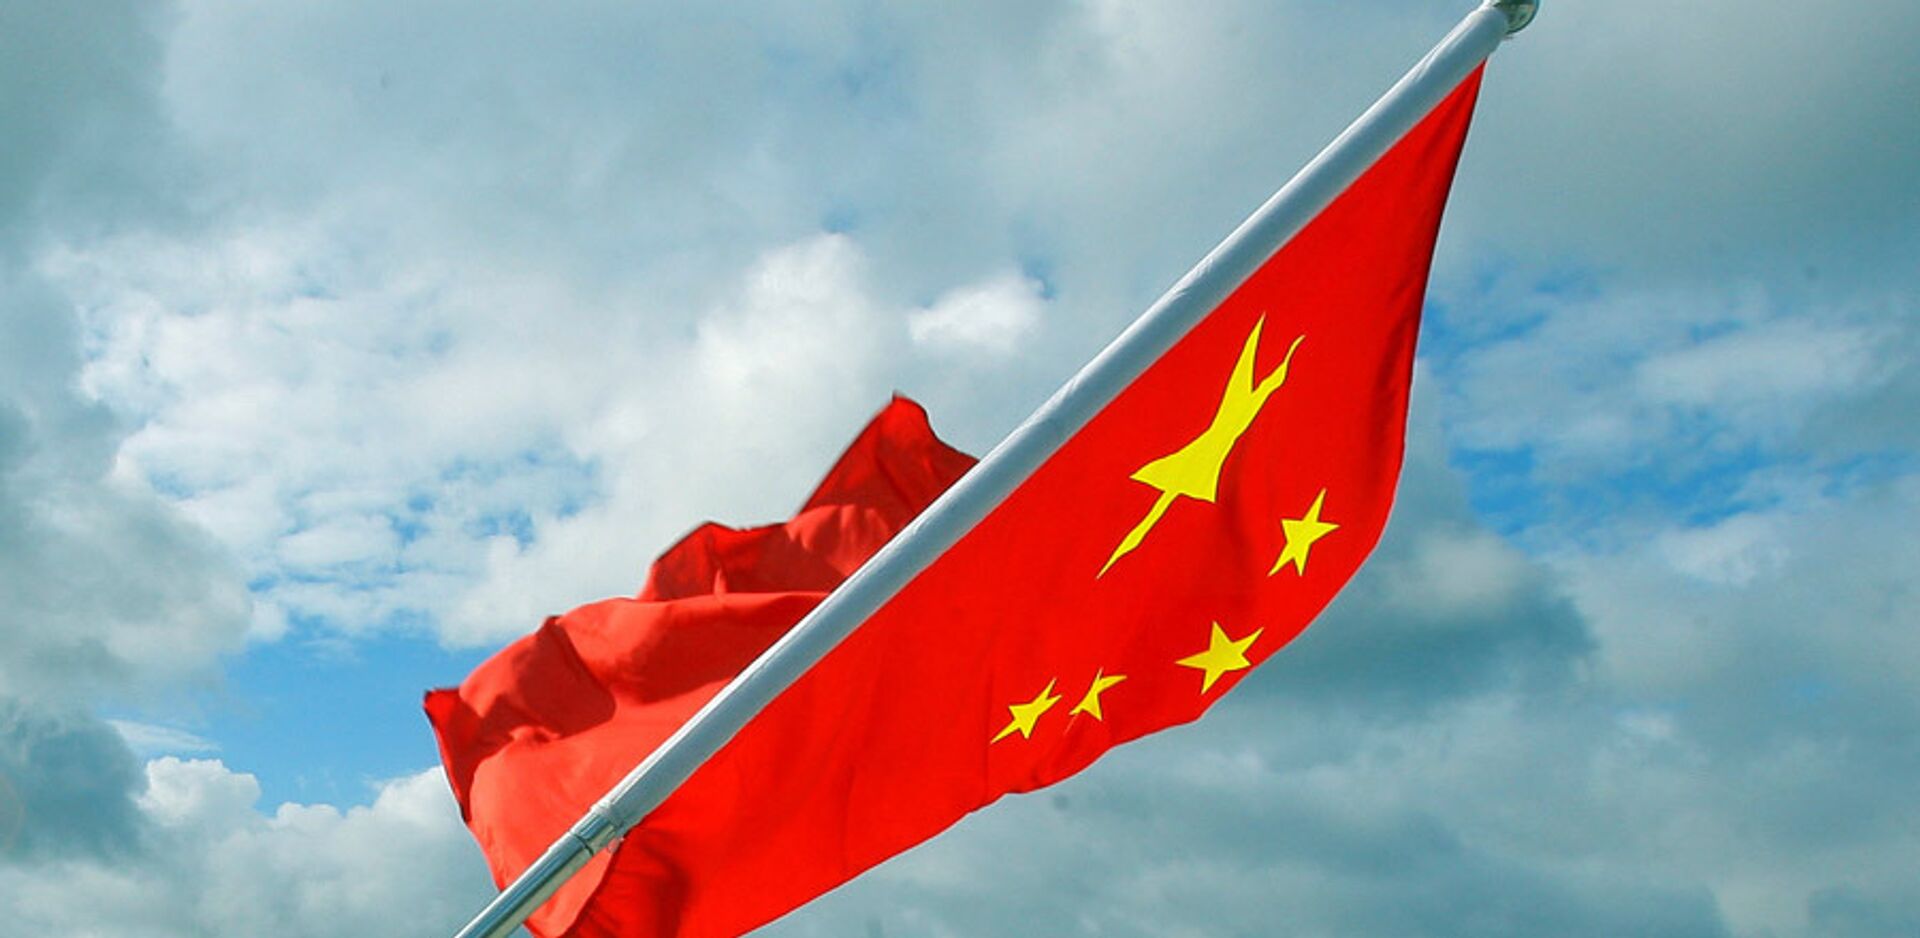 The flag of China - Sputnik International, 1920, 31.07.2020